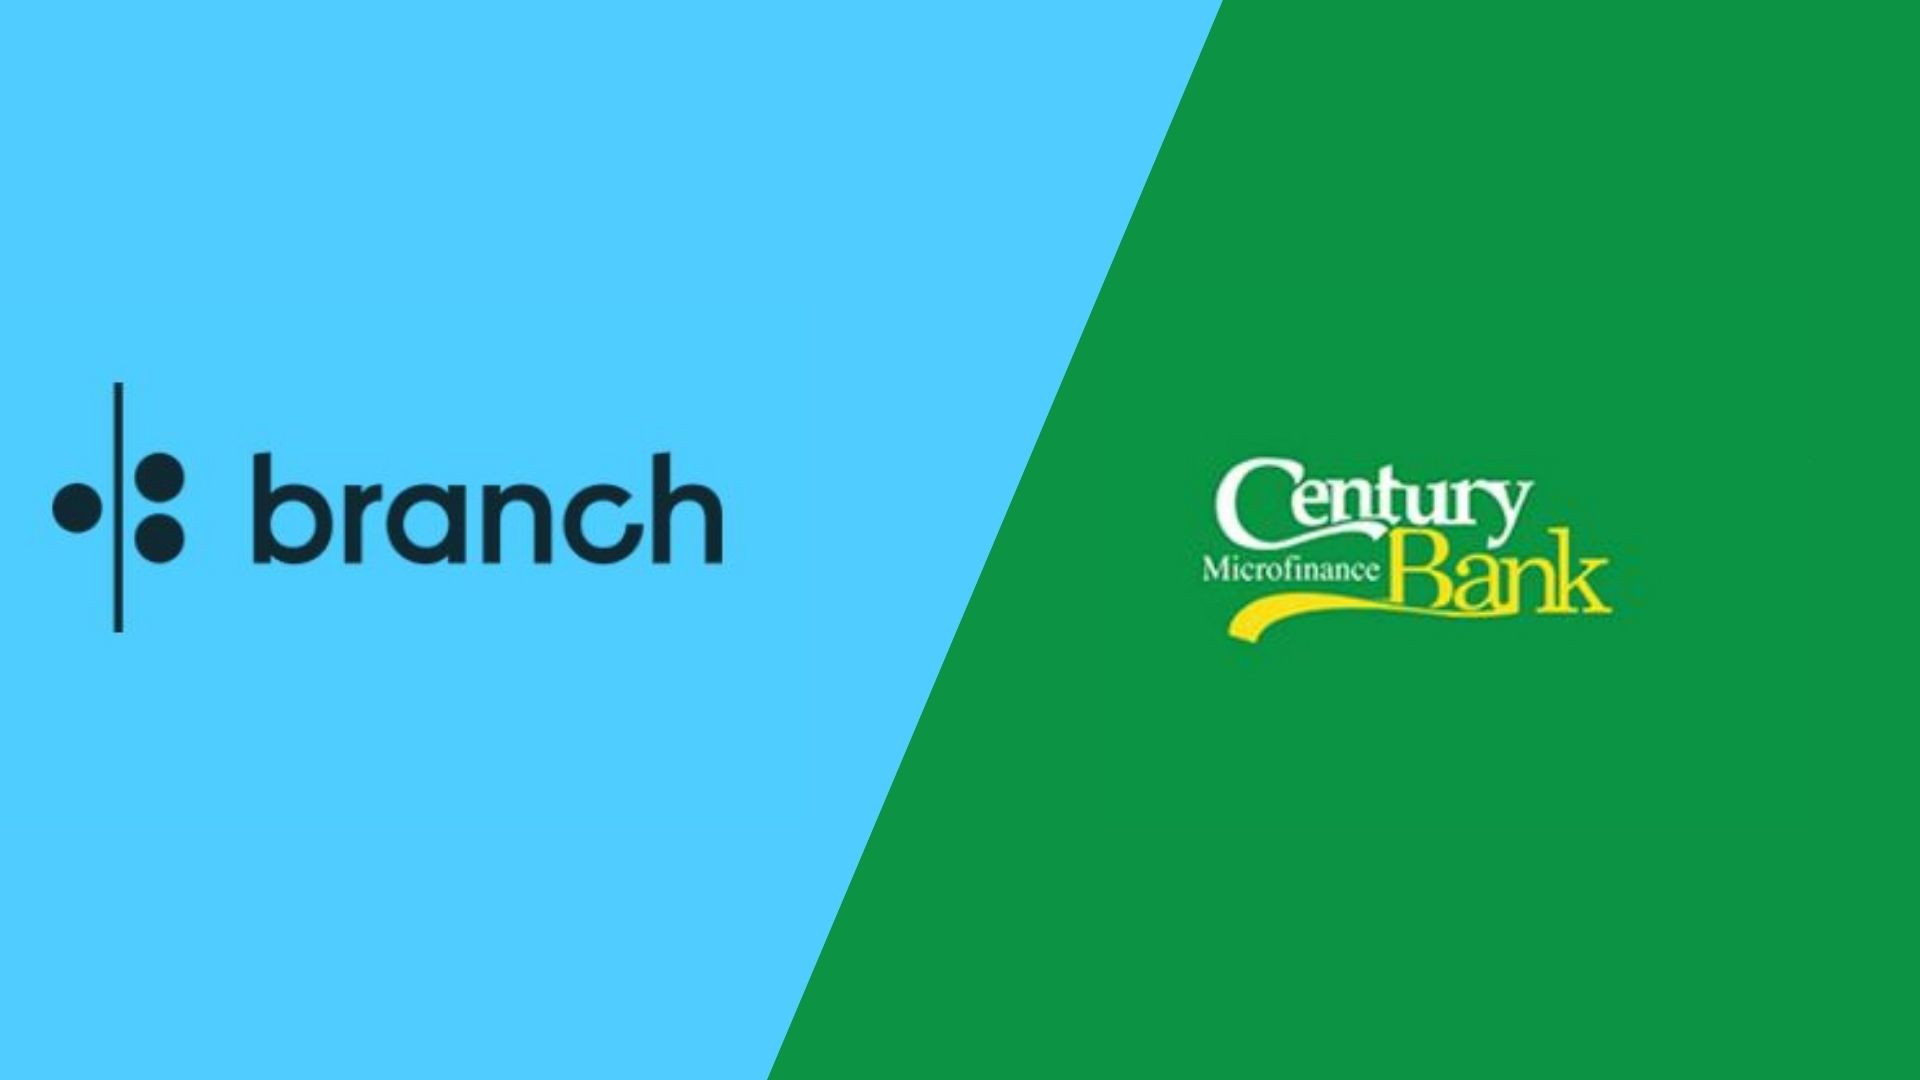 Branch International Limited acquires Century Microfinance Bank